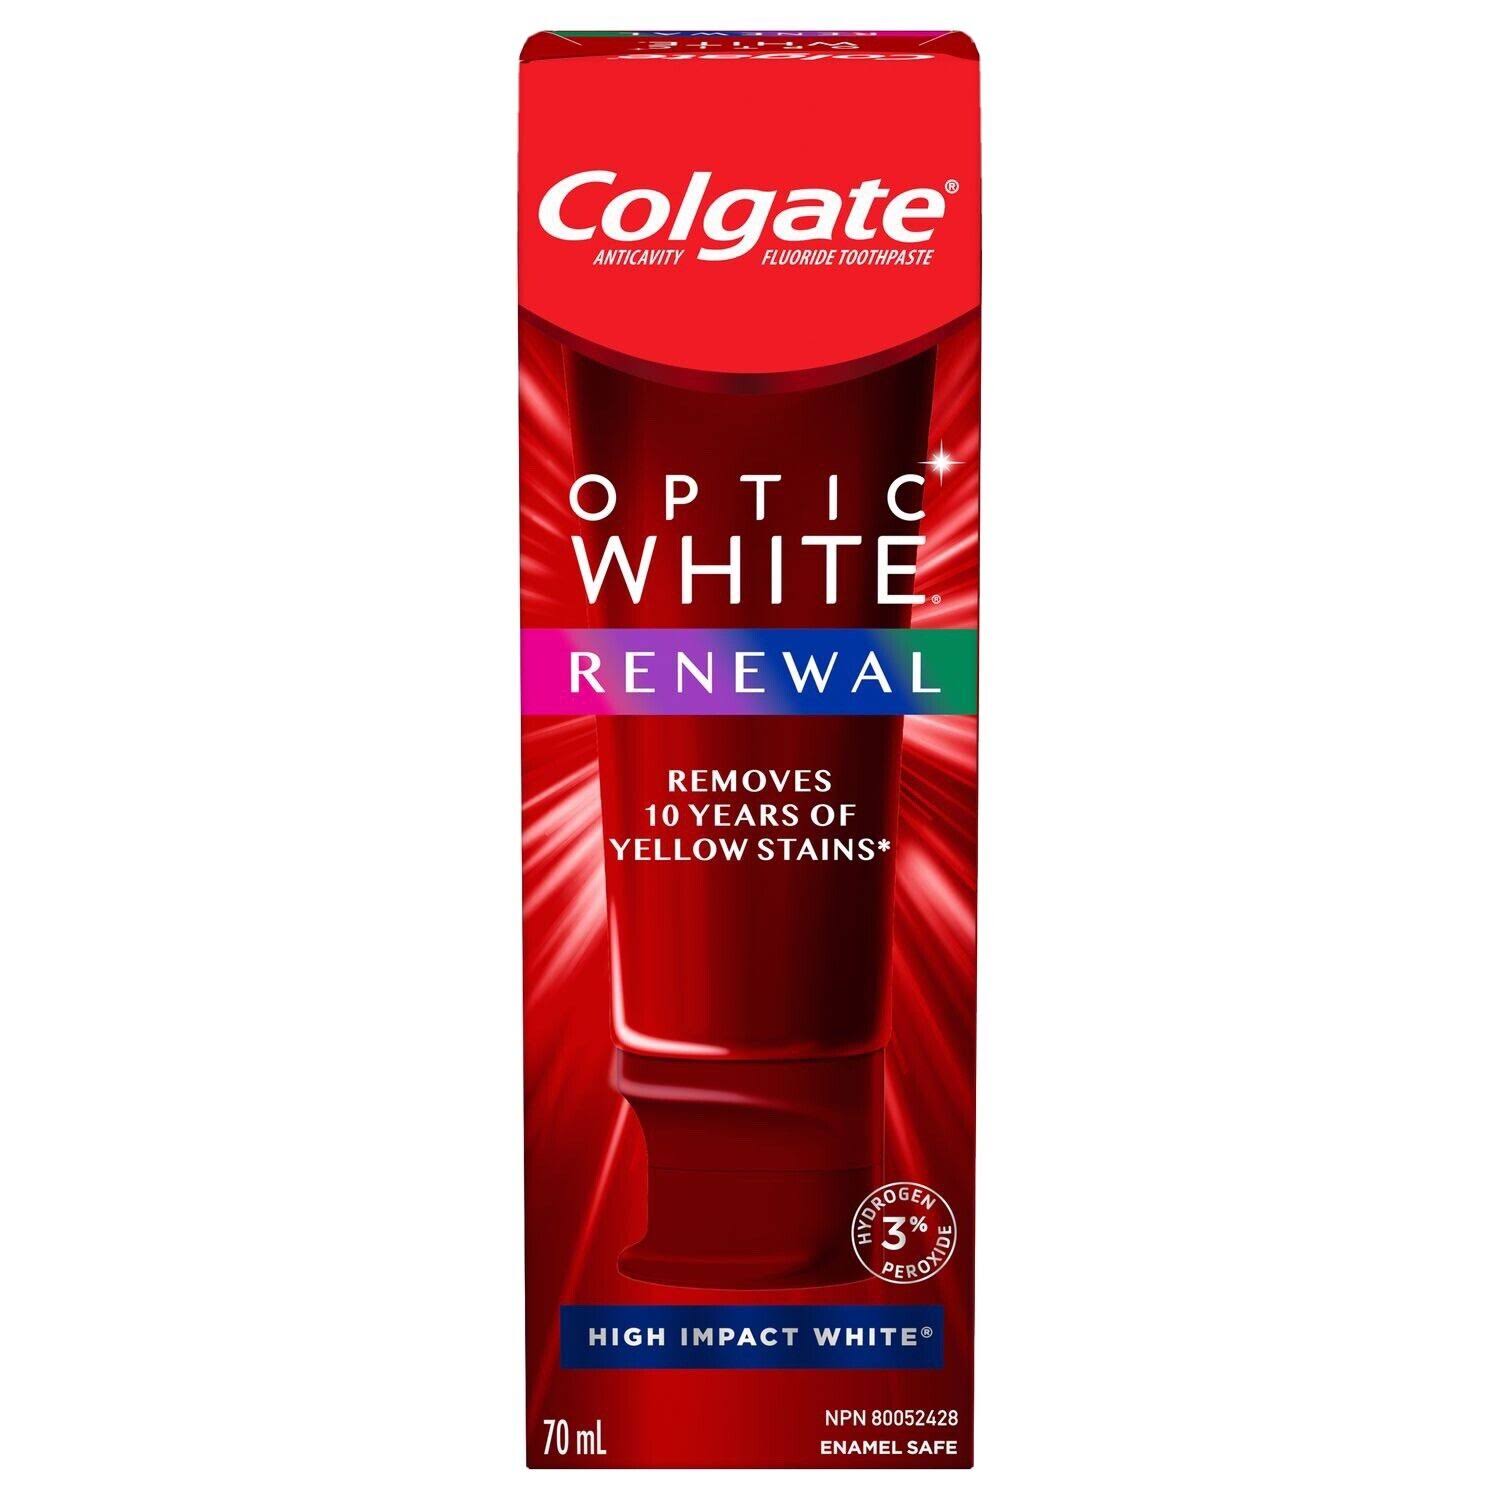 Colgate Optic White Renewal High Impact White Teeth Whitening Toothpaste - 70 Ml